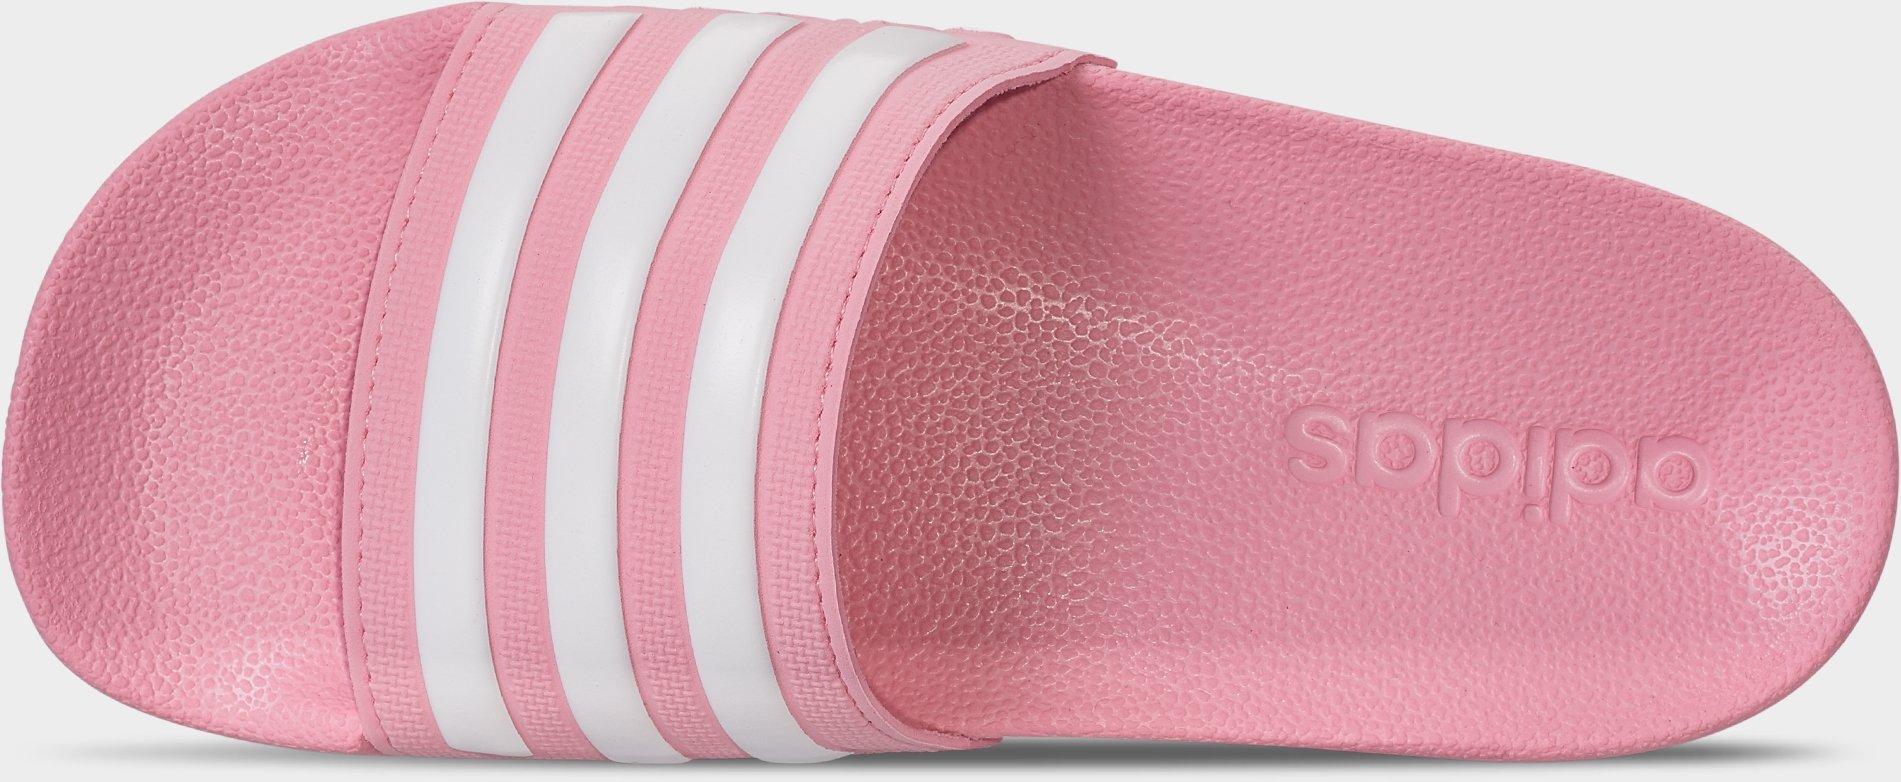 childrens adidas sliders pink